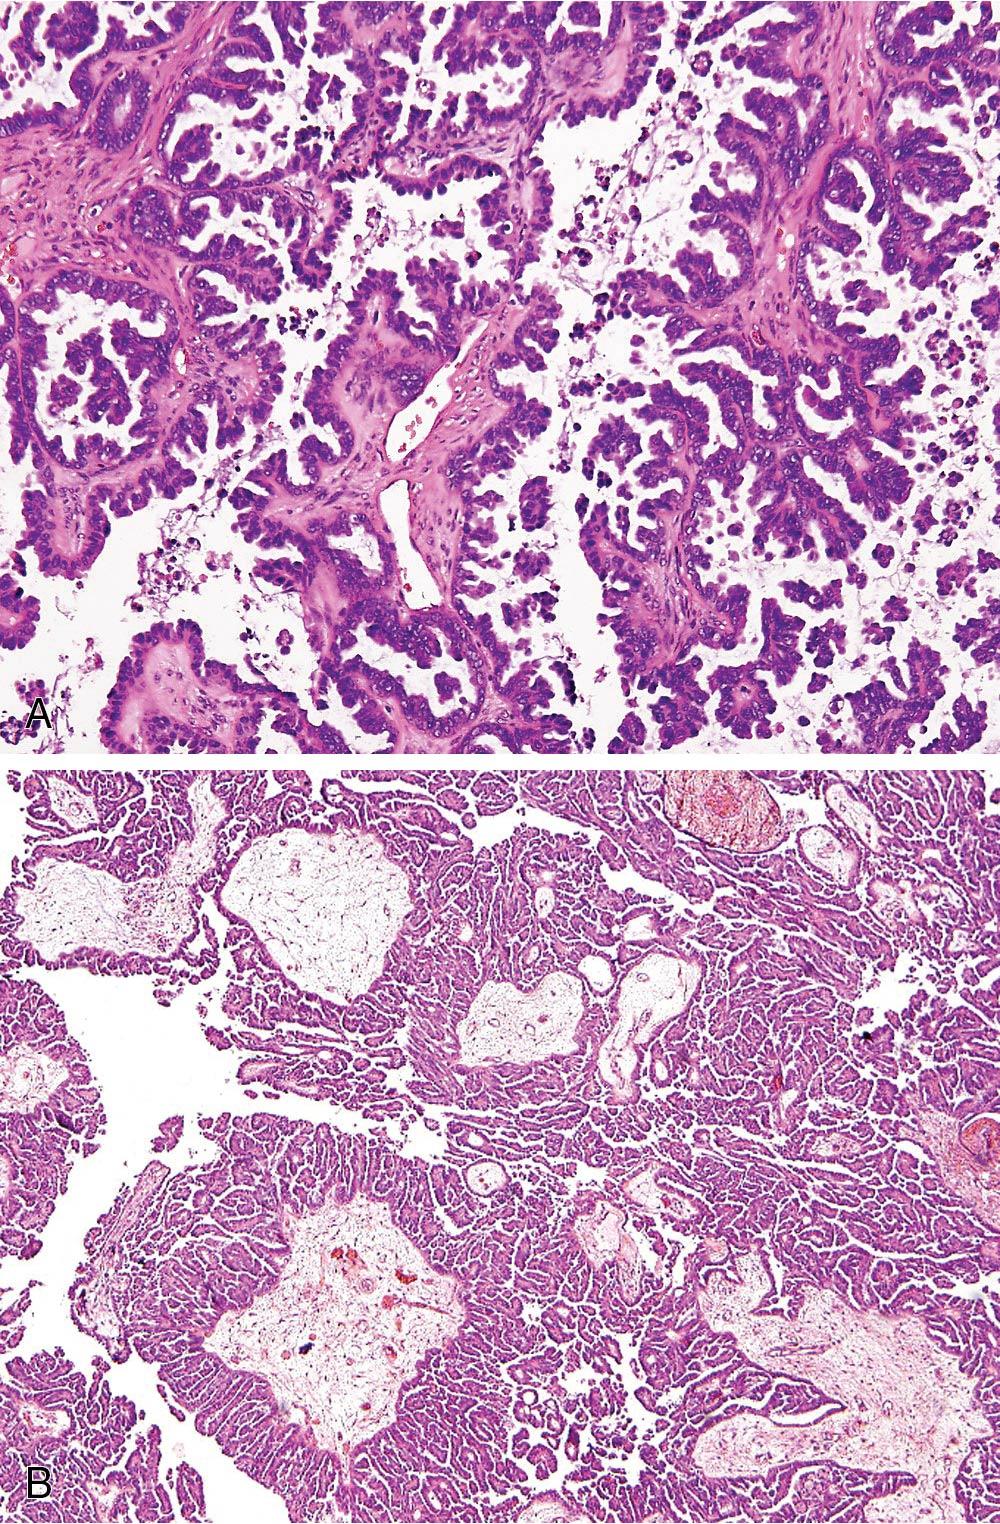 Fig. 33.11, Serous borderline ovarian tumor histologic examination. A, Atypical proliferating tumor. B, Micropapillary/cribriform (noninvasive low-grade serous carcinoma) pattern.